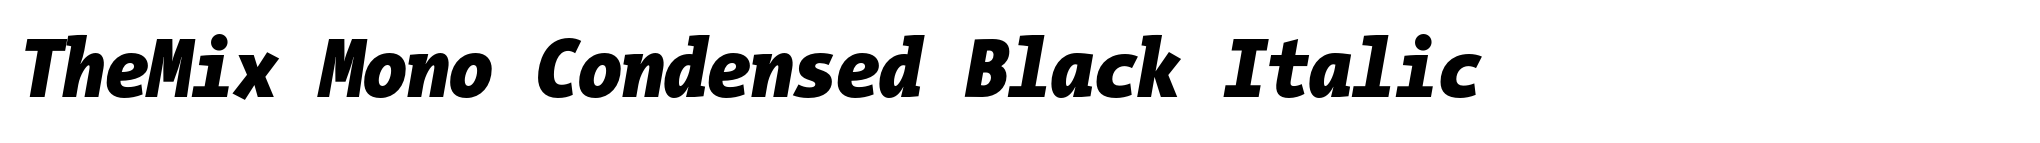 TheMix Mono Condensed Black Italic image